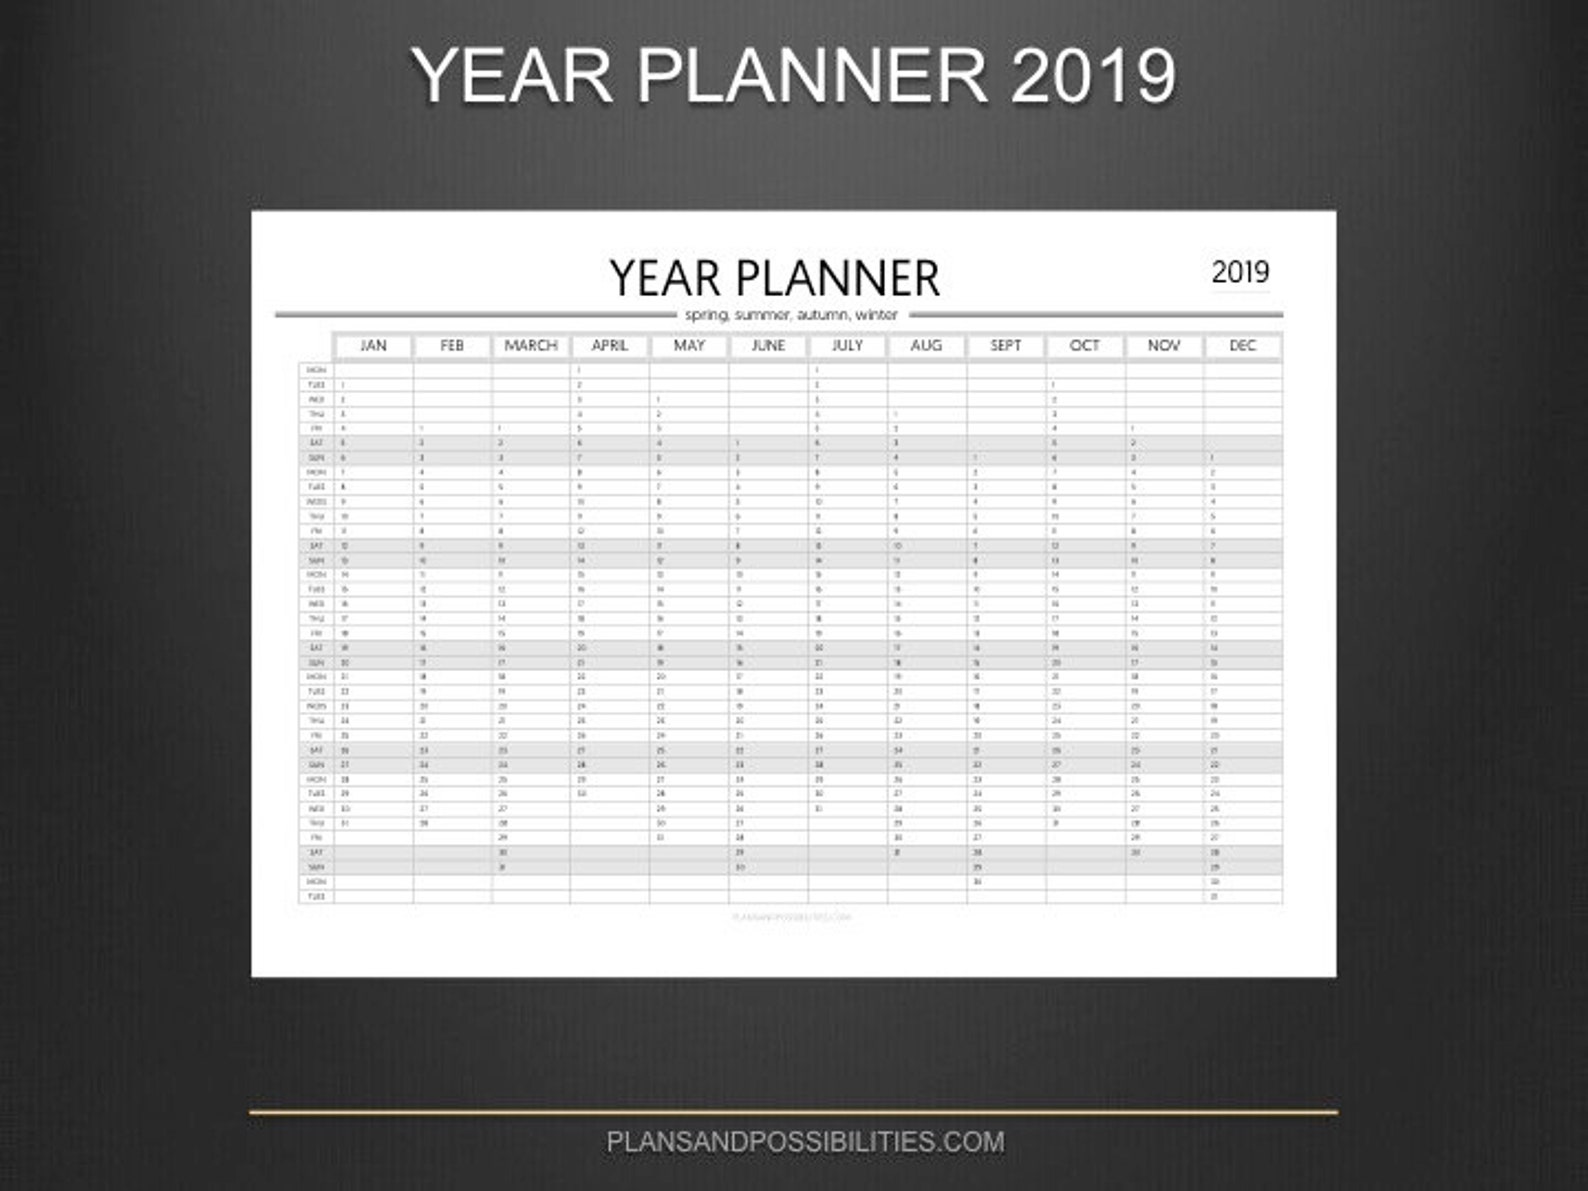 1 year plan. Year Planner. Resolution year Plan pdf. Canceling Plans (2019).